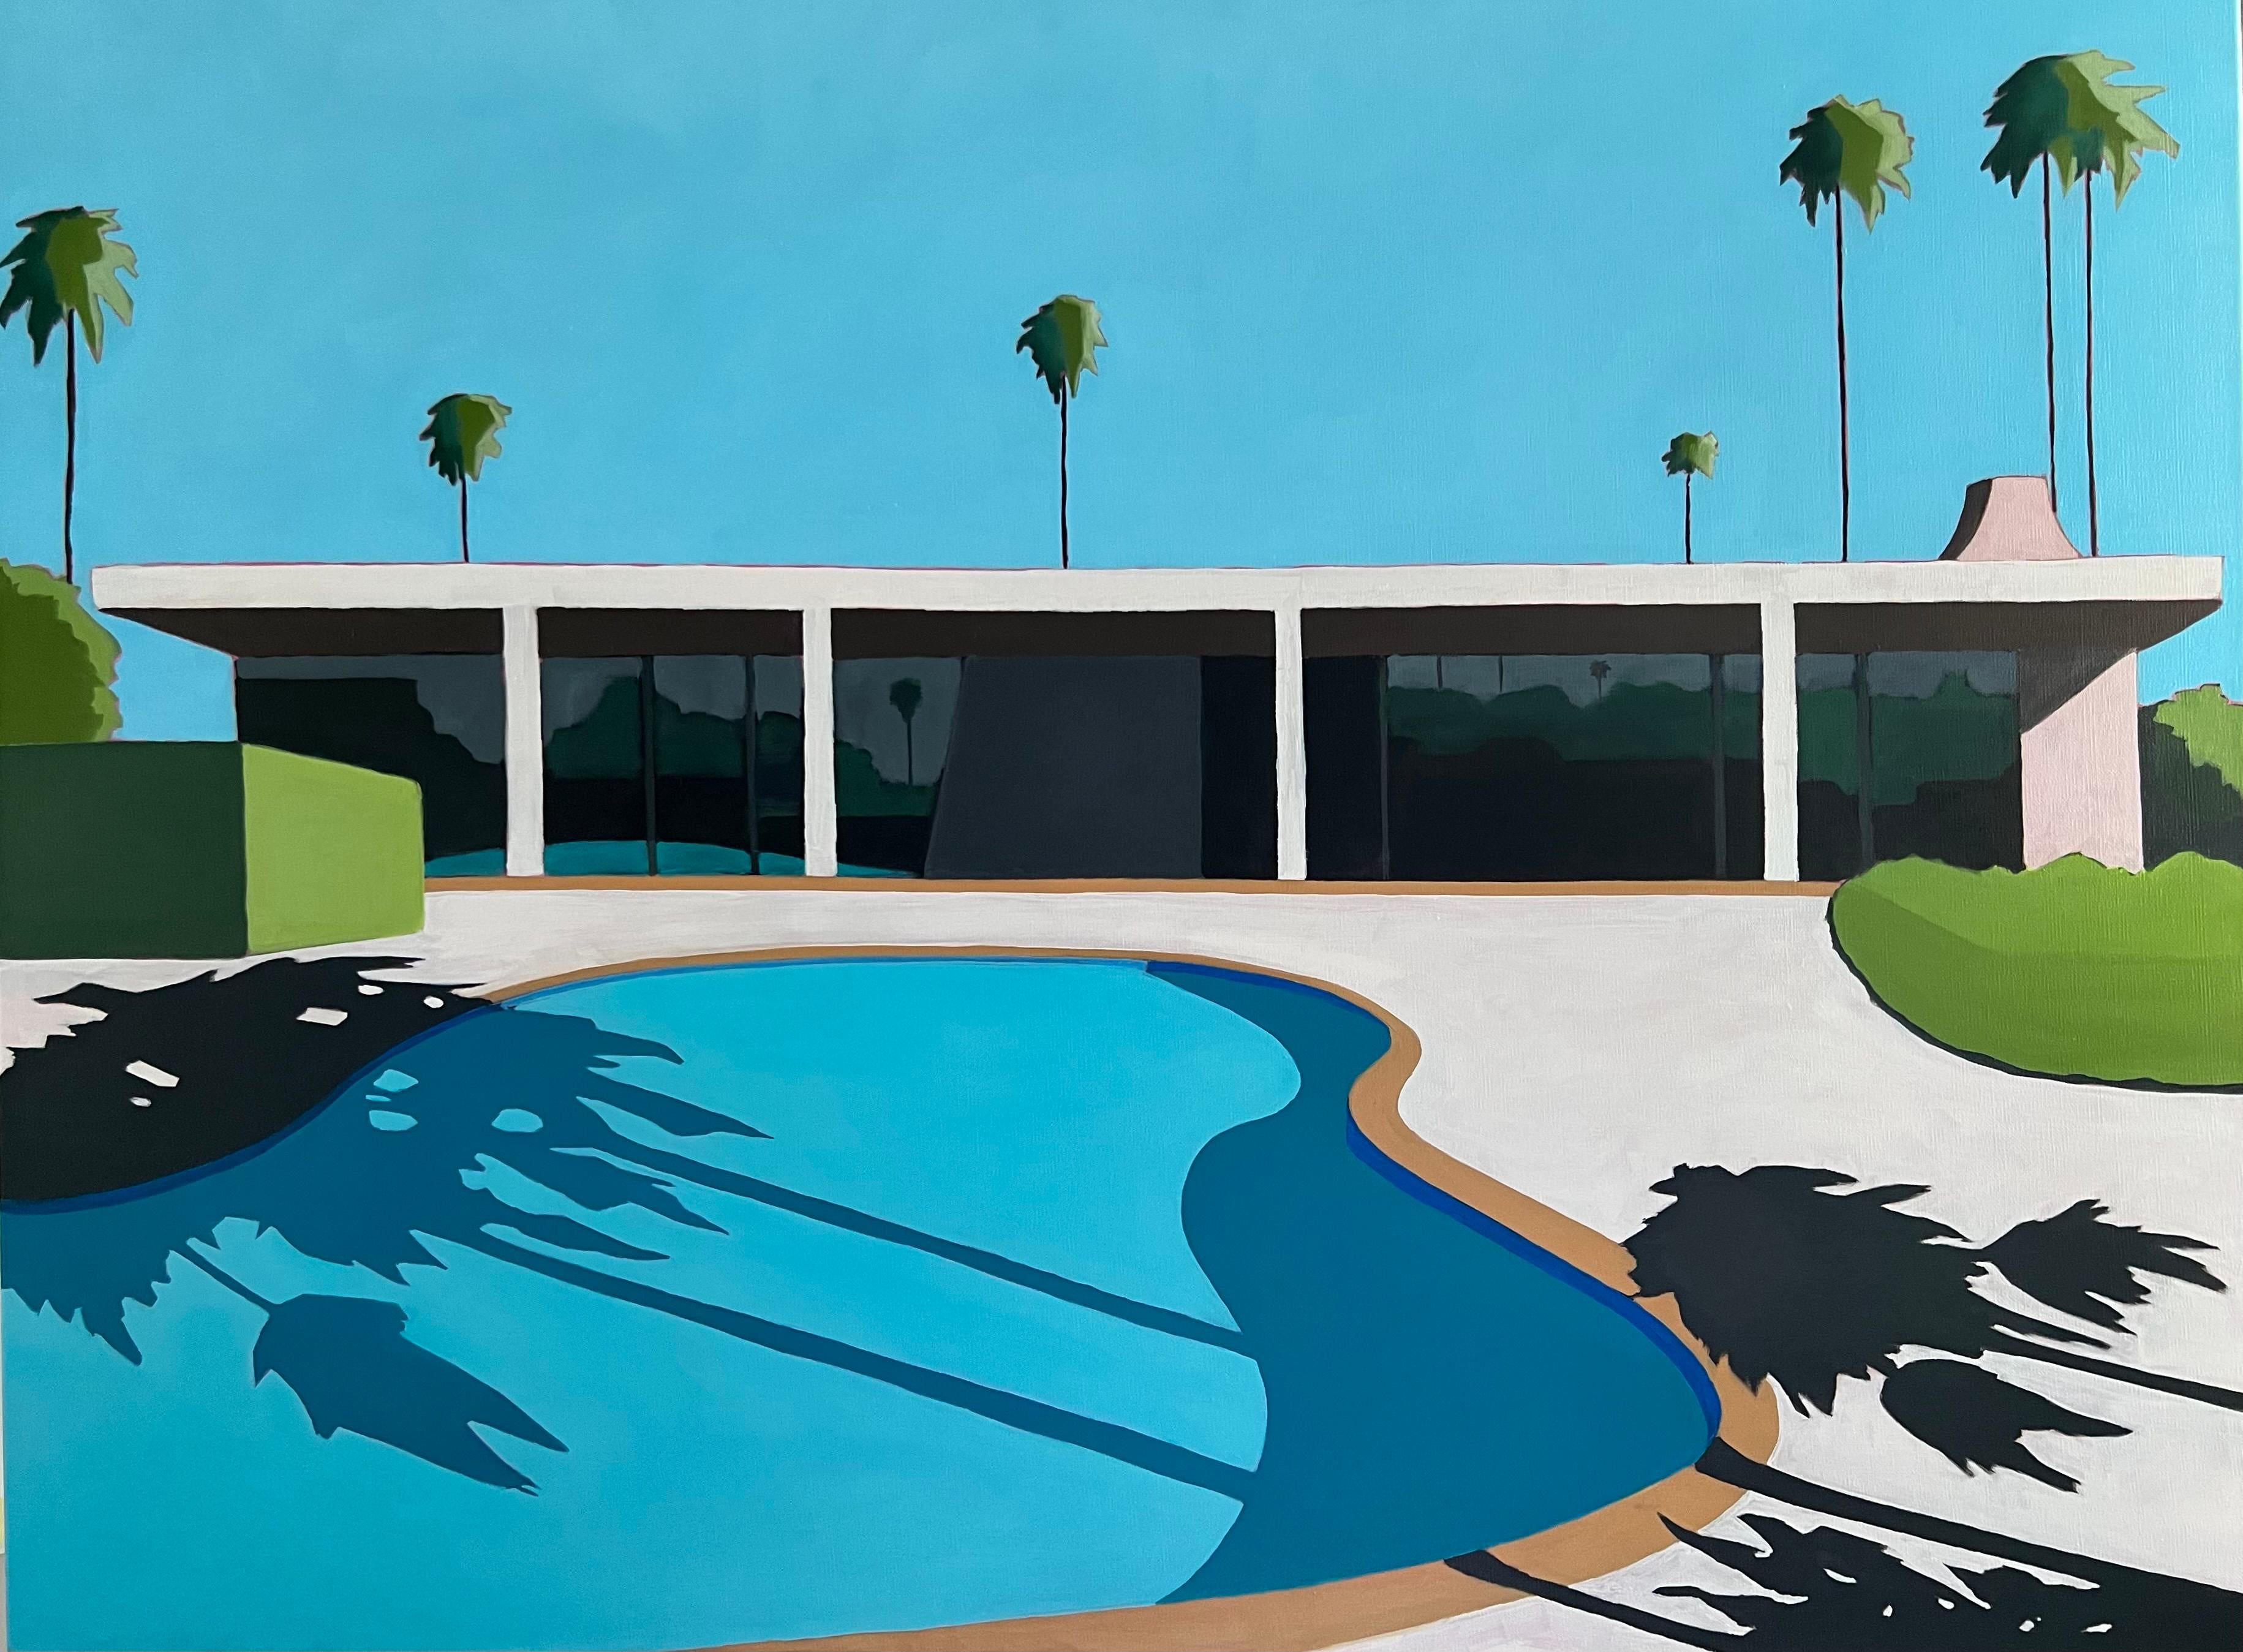 Figurative Painting Al Freno - Pool Encompassed by Palm Trees - réalisme original - minimalisme